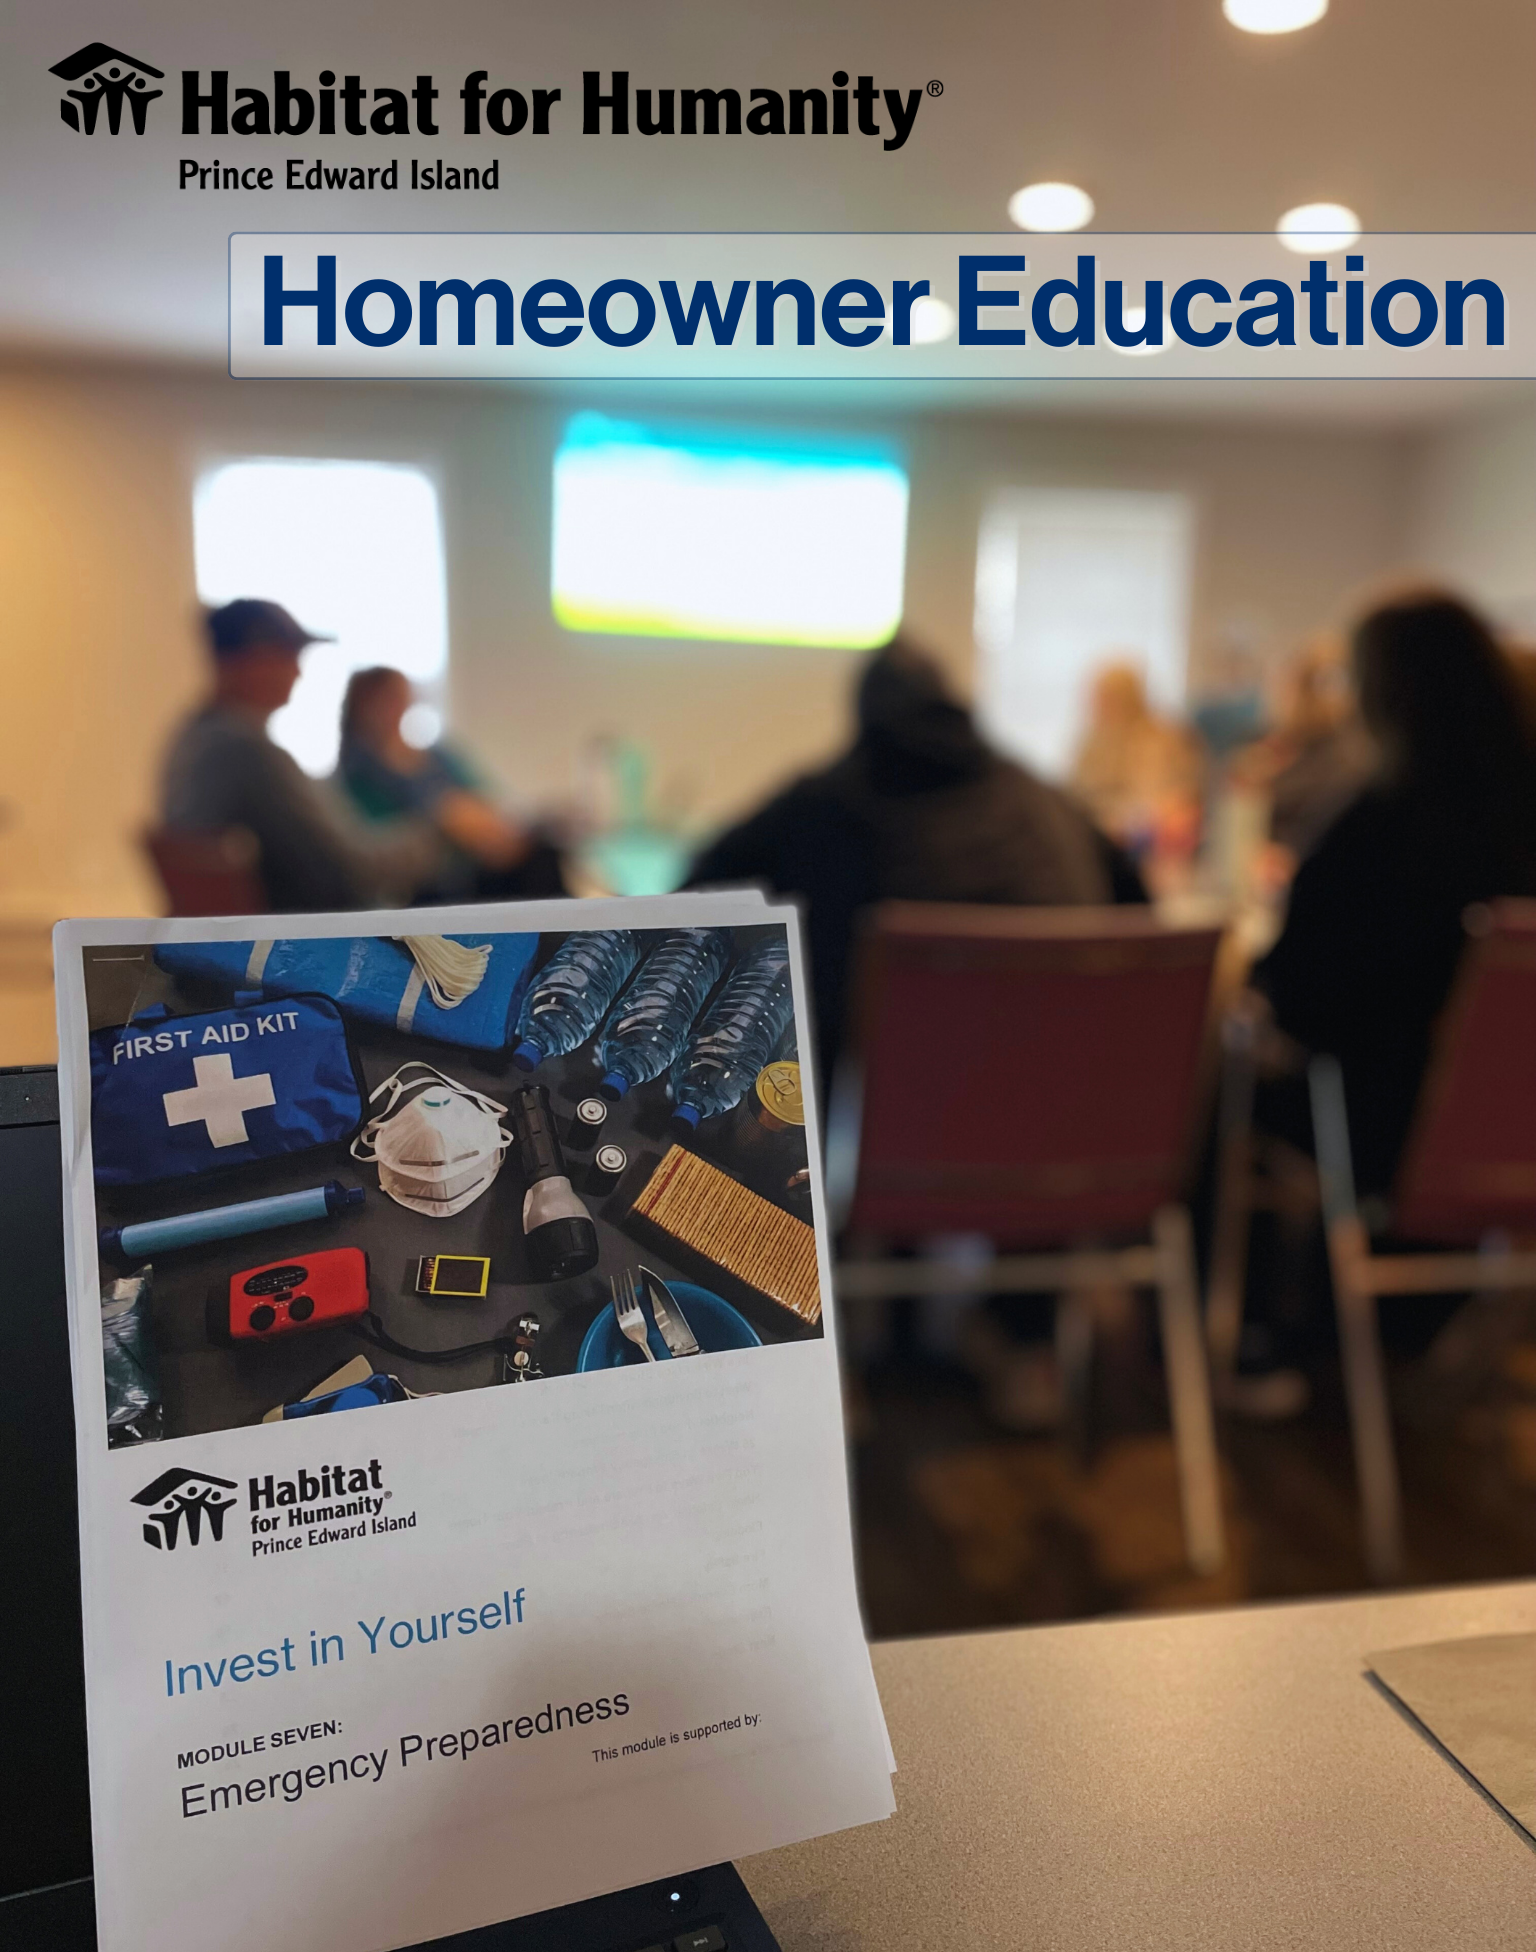 Homeowner Education